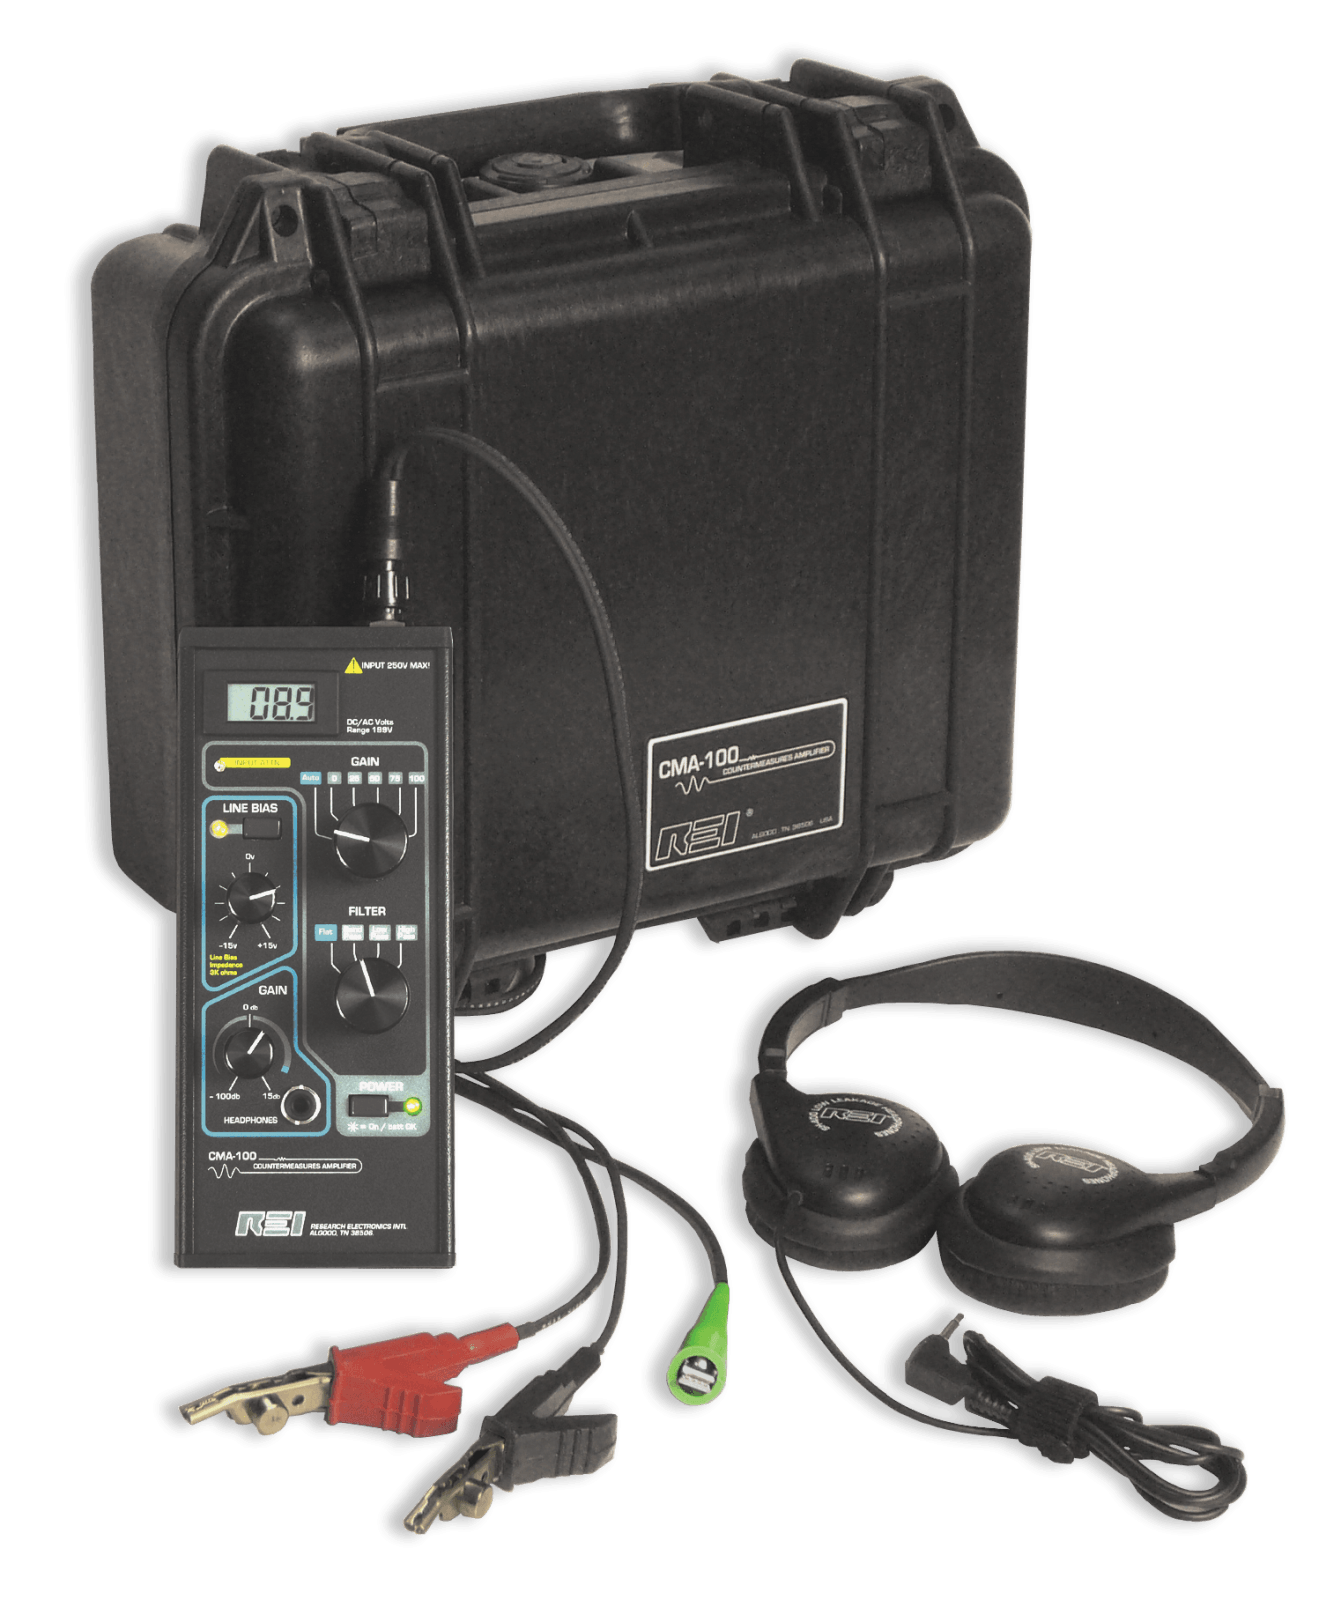 CMA-100 Countermeasures Amplifier Kit